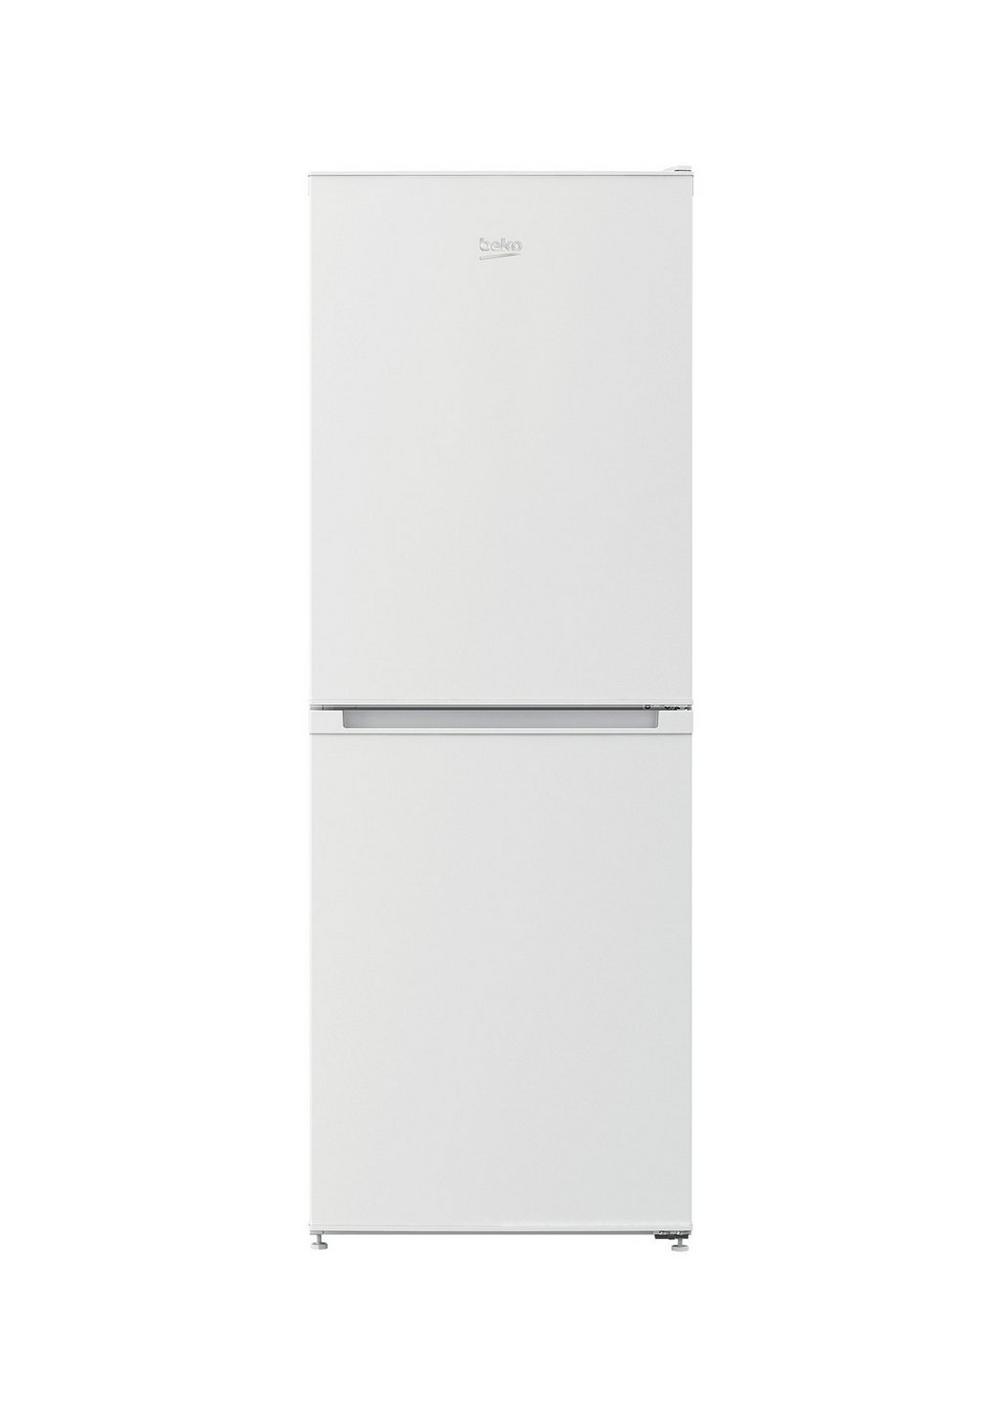 Beko Garage Freezer: A Good Looking, Durable Freezer With an Ice Maker